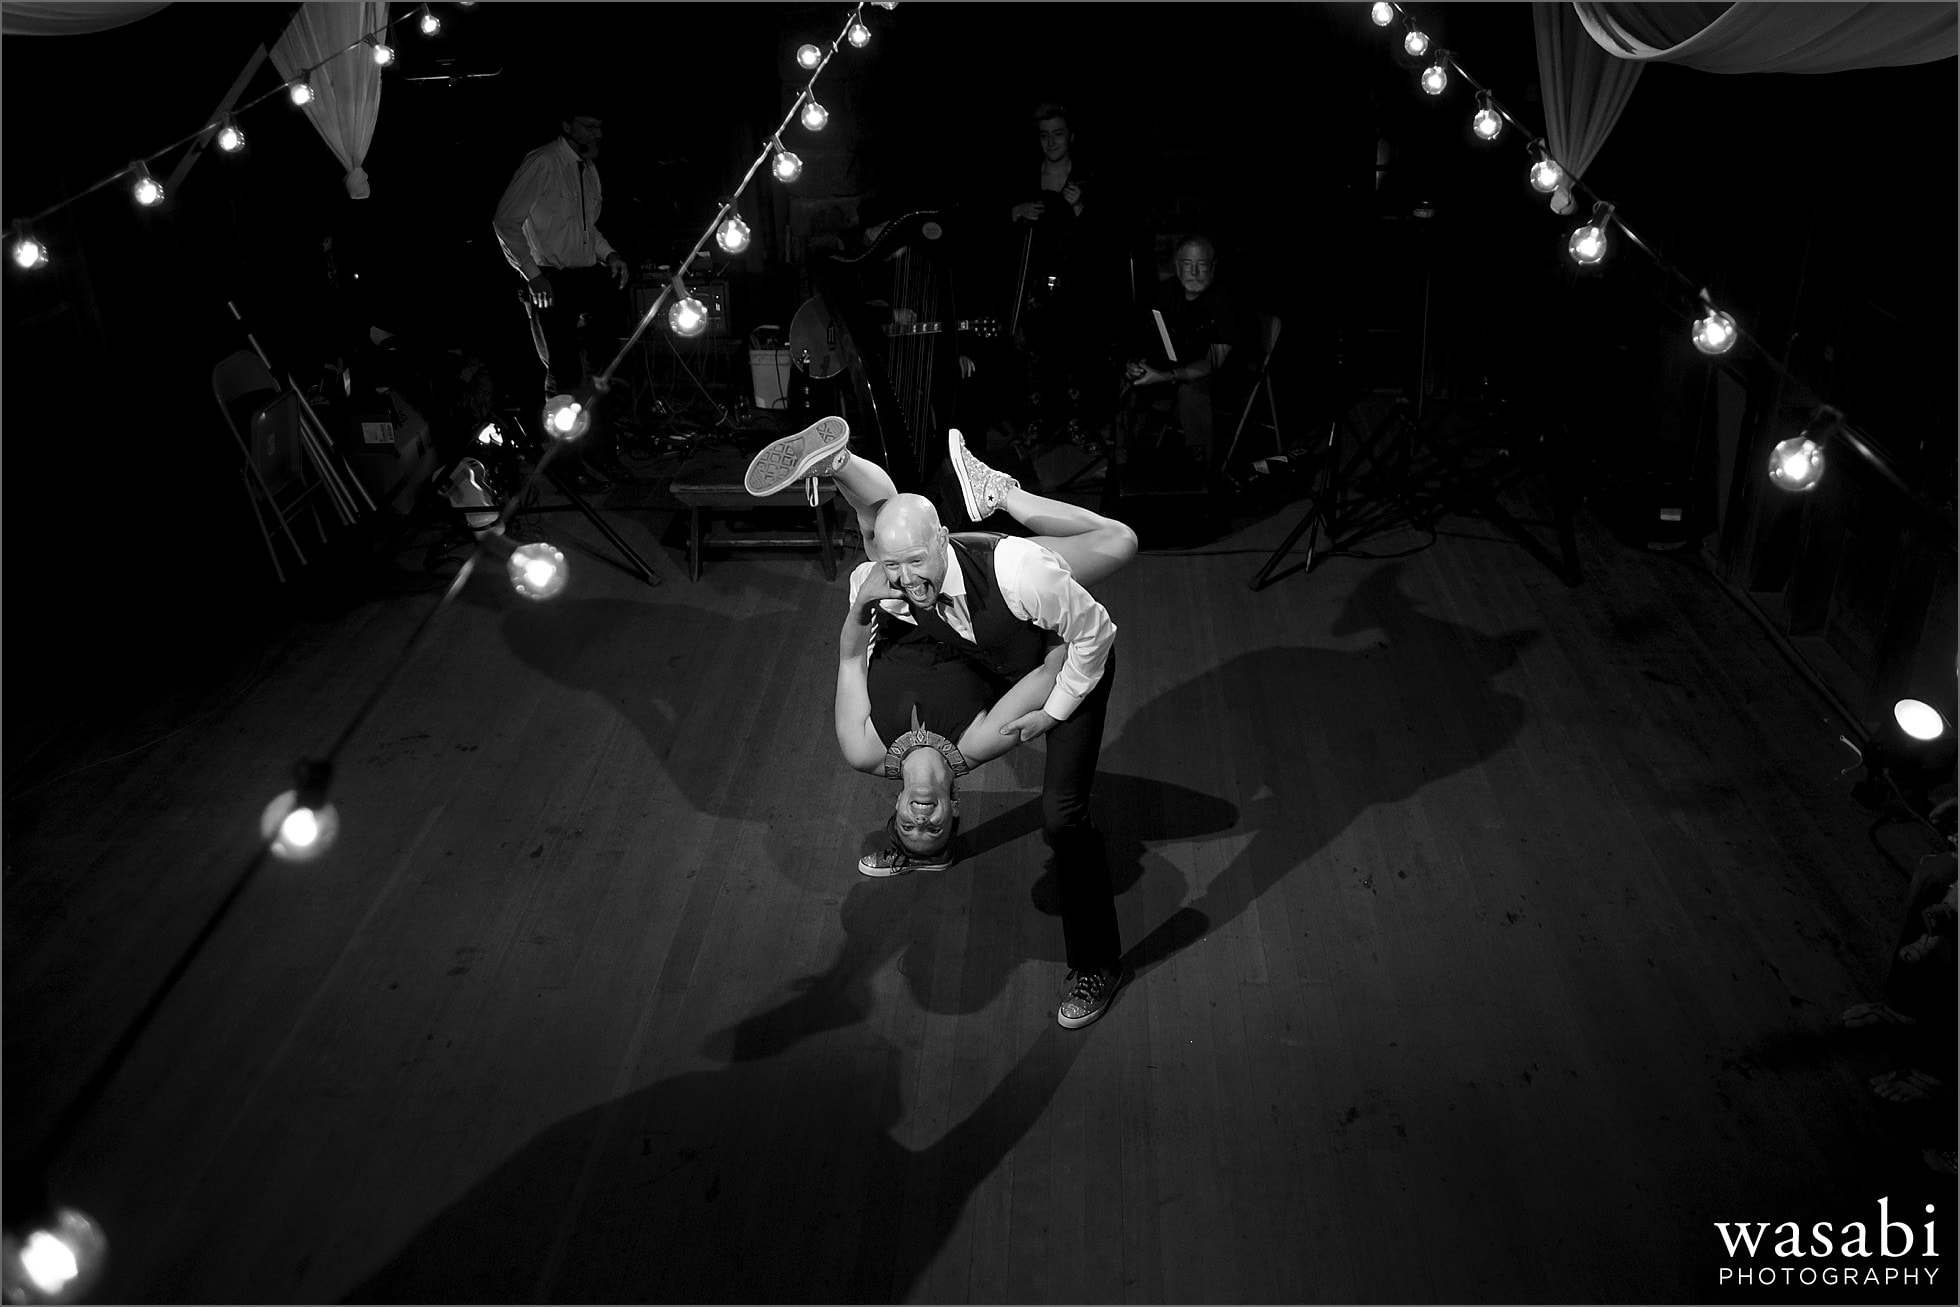 barn dance wedding reception photos